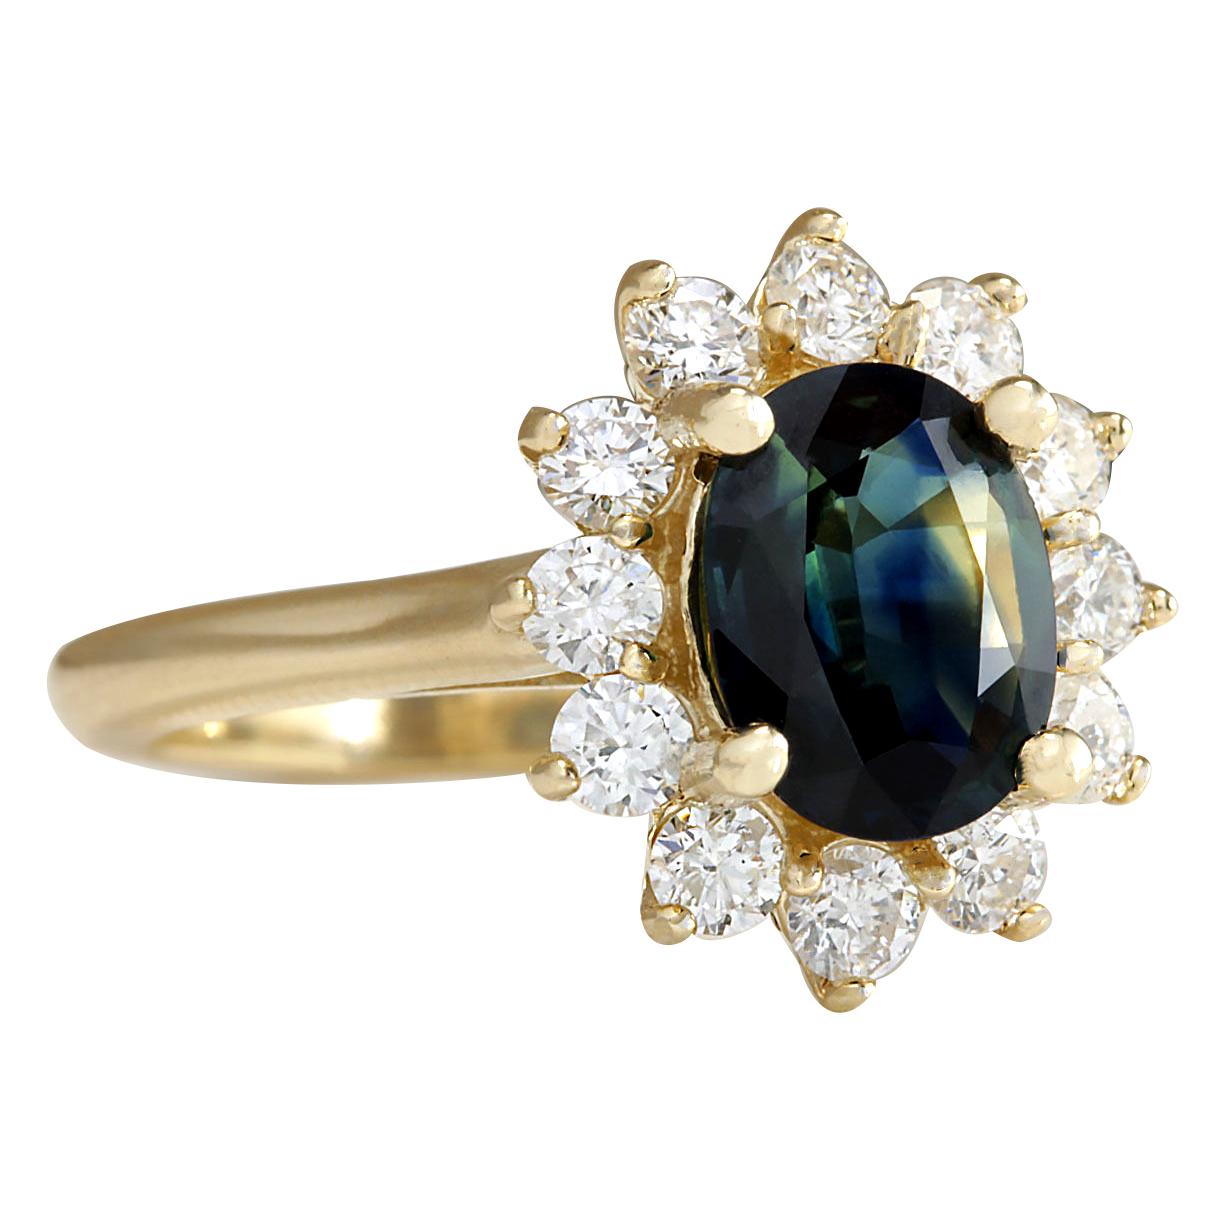 2.93 Carat Natural Sapphire 14 Karat Yellow Gold Diamond Ring
Stamped: 14K Yellow Gold
Total Ring Weight: 5.0 Grams
Total Natural Sapphire Weight is 2.08 Carat (Measures: 8.00x6.00 mm)
Color: Blue
Total Natural Diamond Weight is 0.85 Carat
Color: